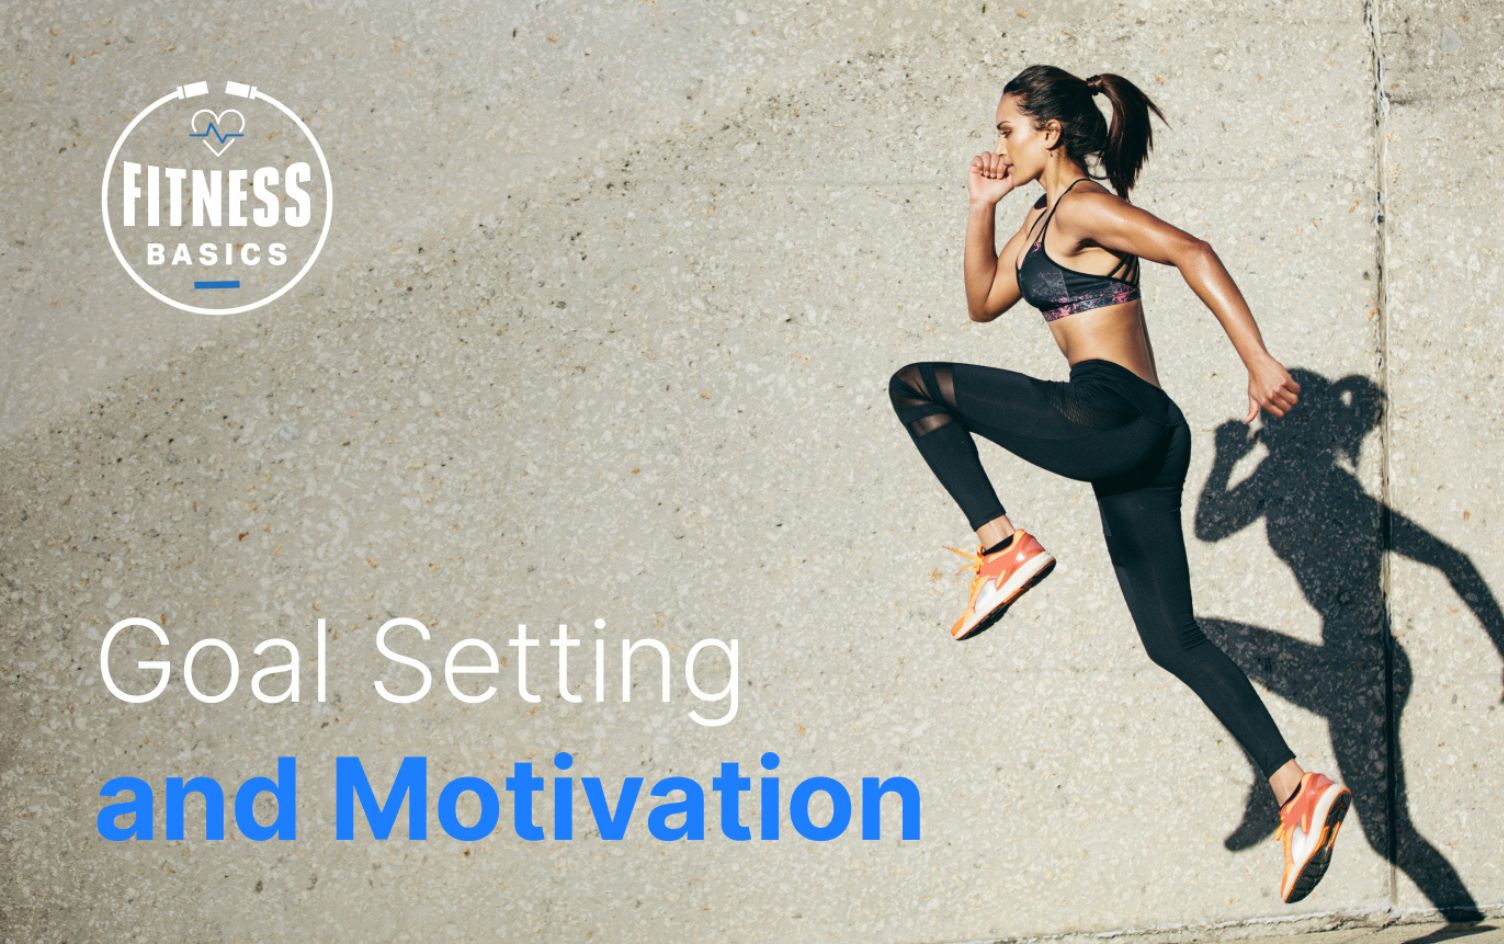 https://blog.myfitnesspal.com/wp-content/uploads/2020/06/Fitness-Basics-Goal-Setting-and-Motivation-2-1.jpg